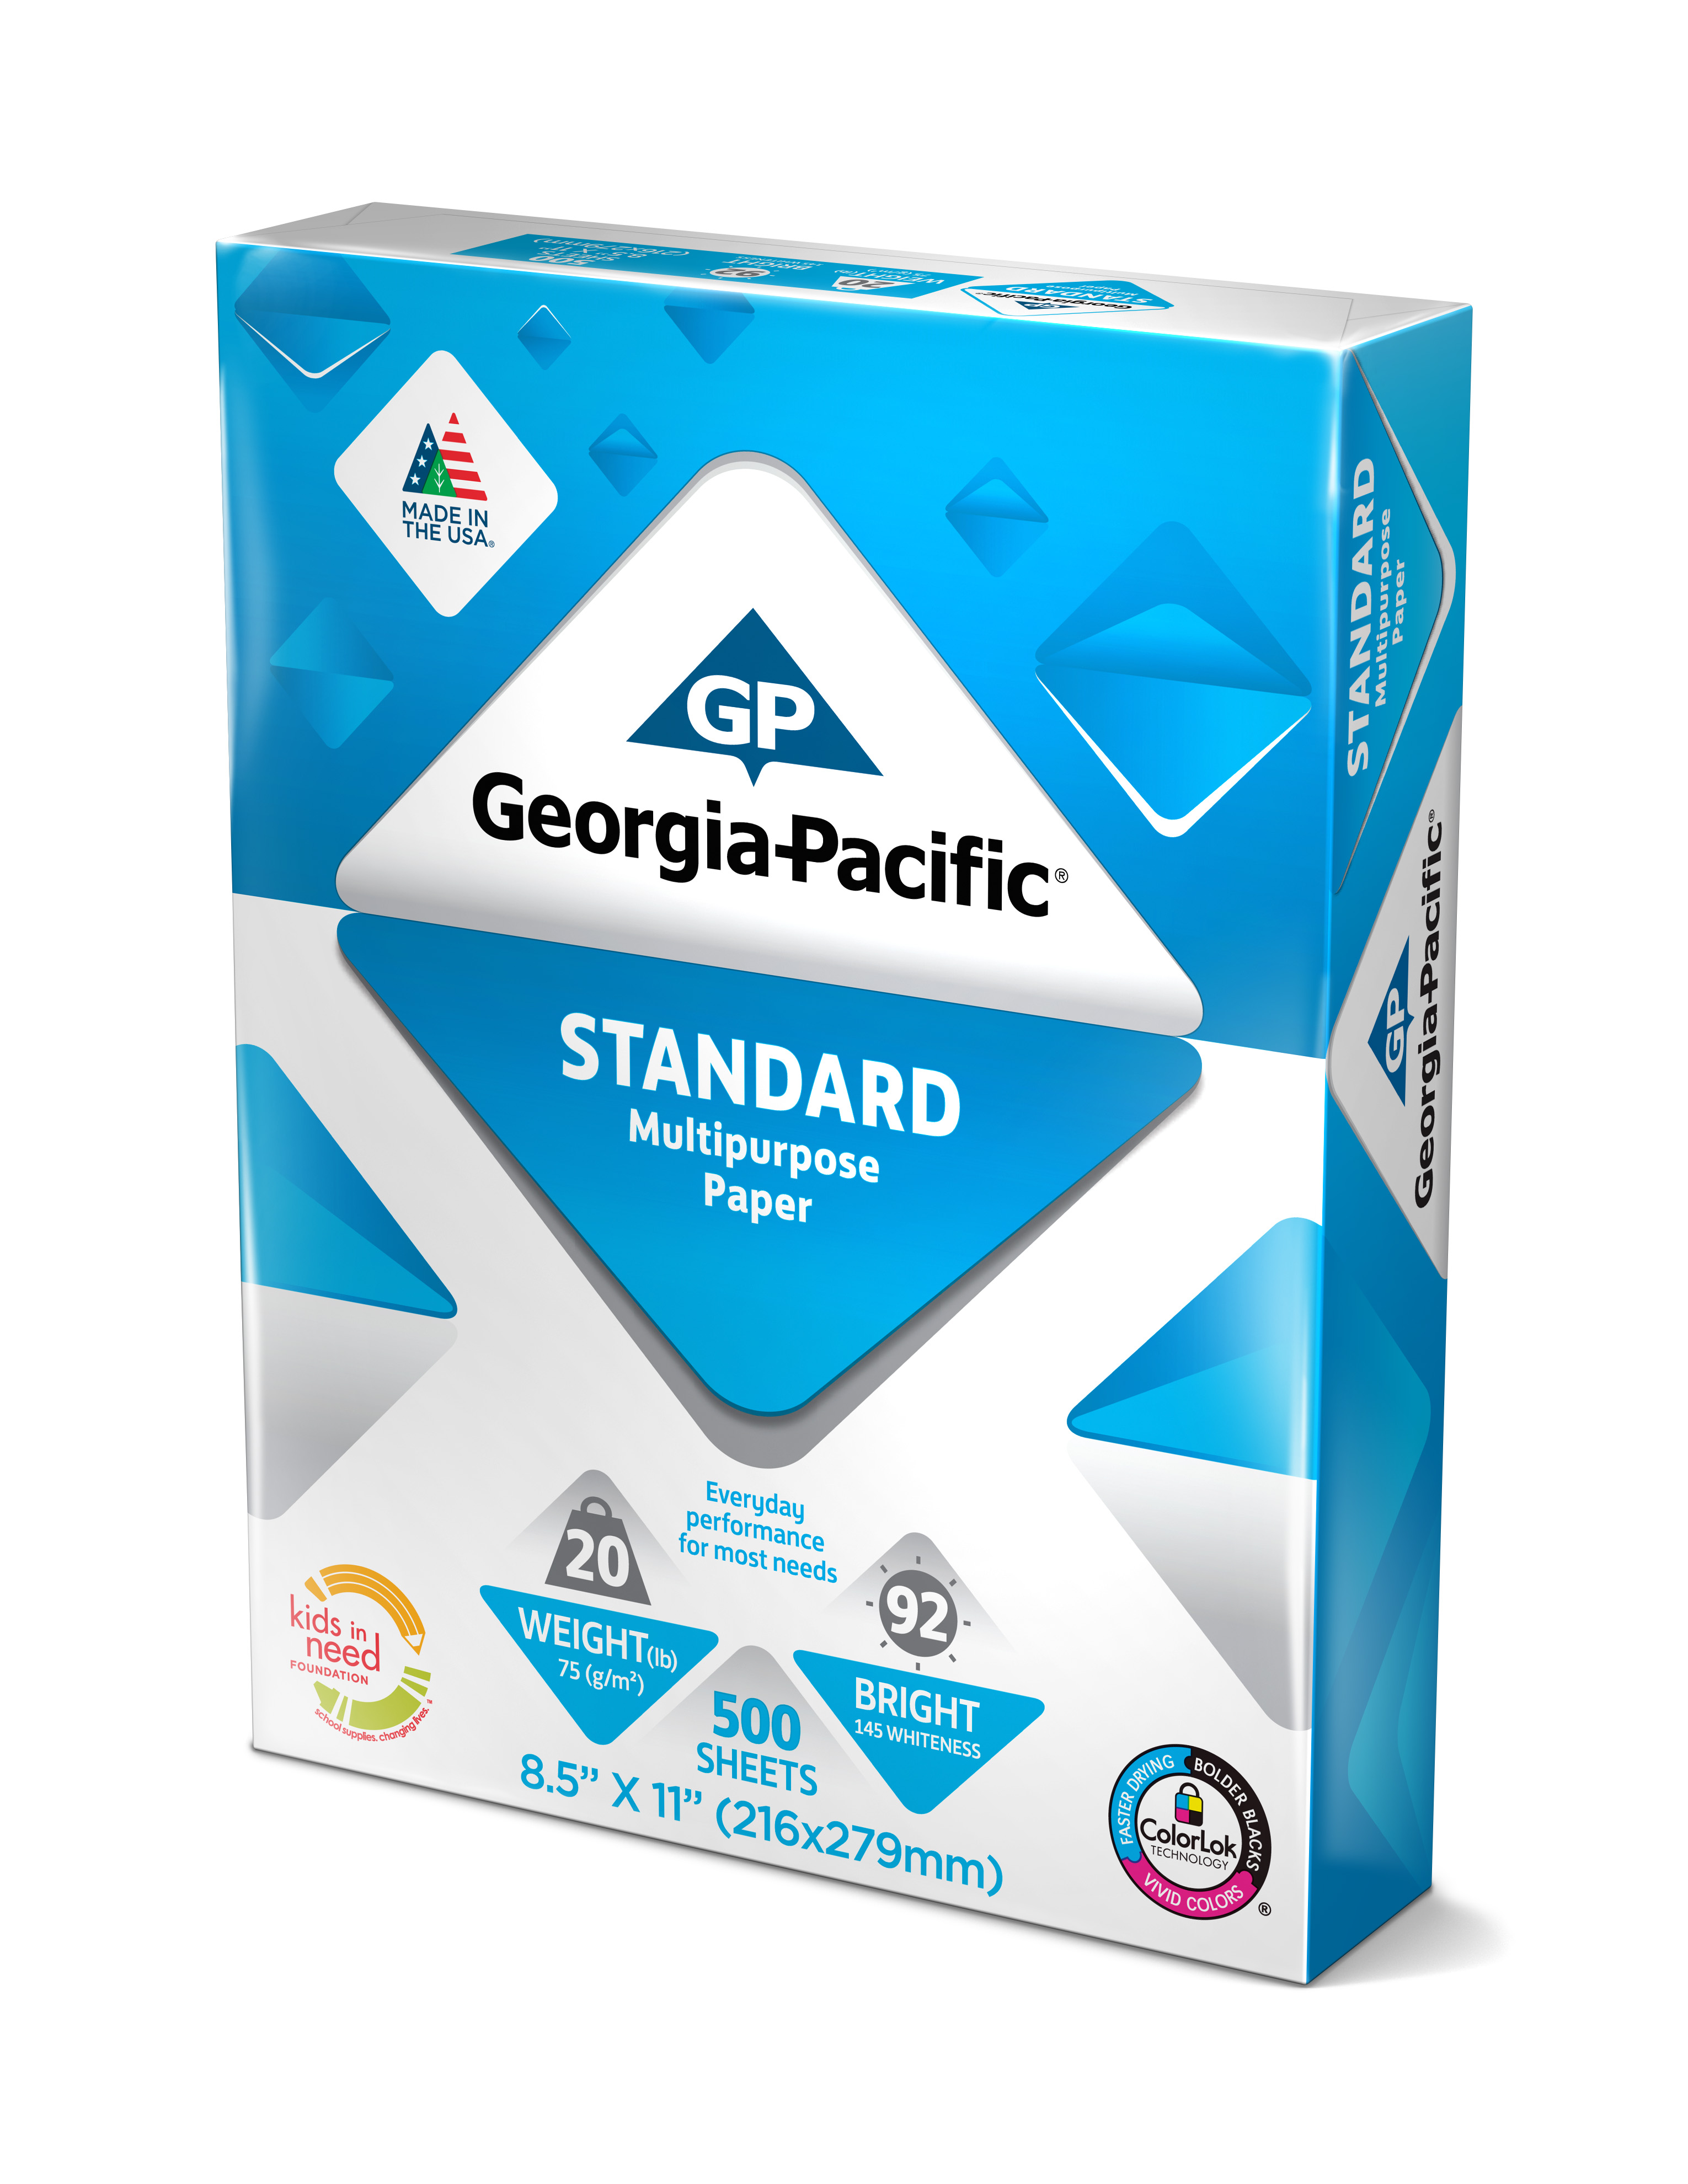 Georgia-Pacific Standard Paper 8.5 x 11, 20lb/92 Bright, 5000 Sheets - image 3 of 4